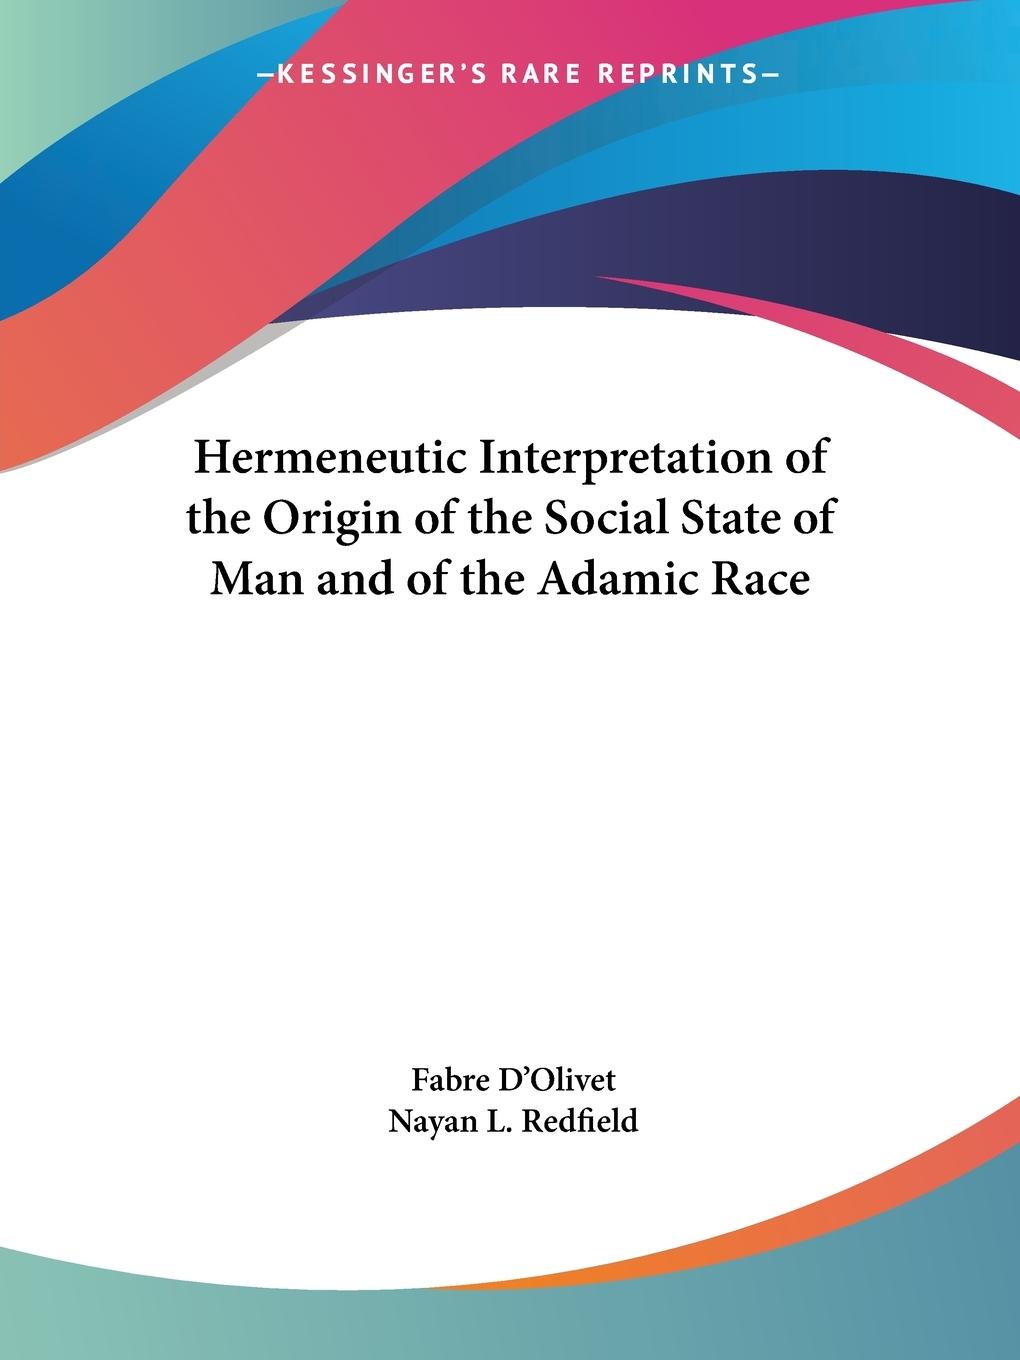 Hermeneutic Interpretation of the Origin of the Social State of Man and of the Adamic Race - D Olivet, Fabre